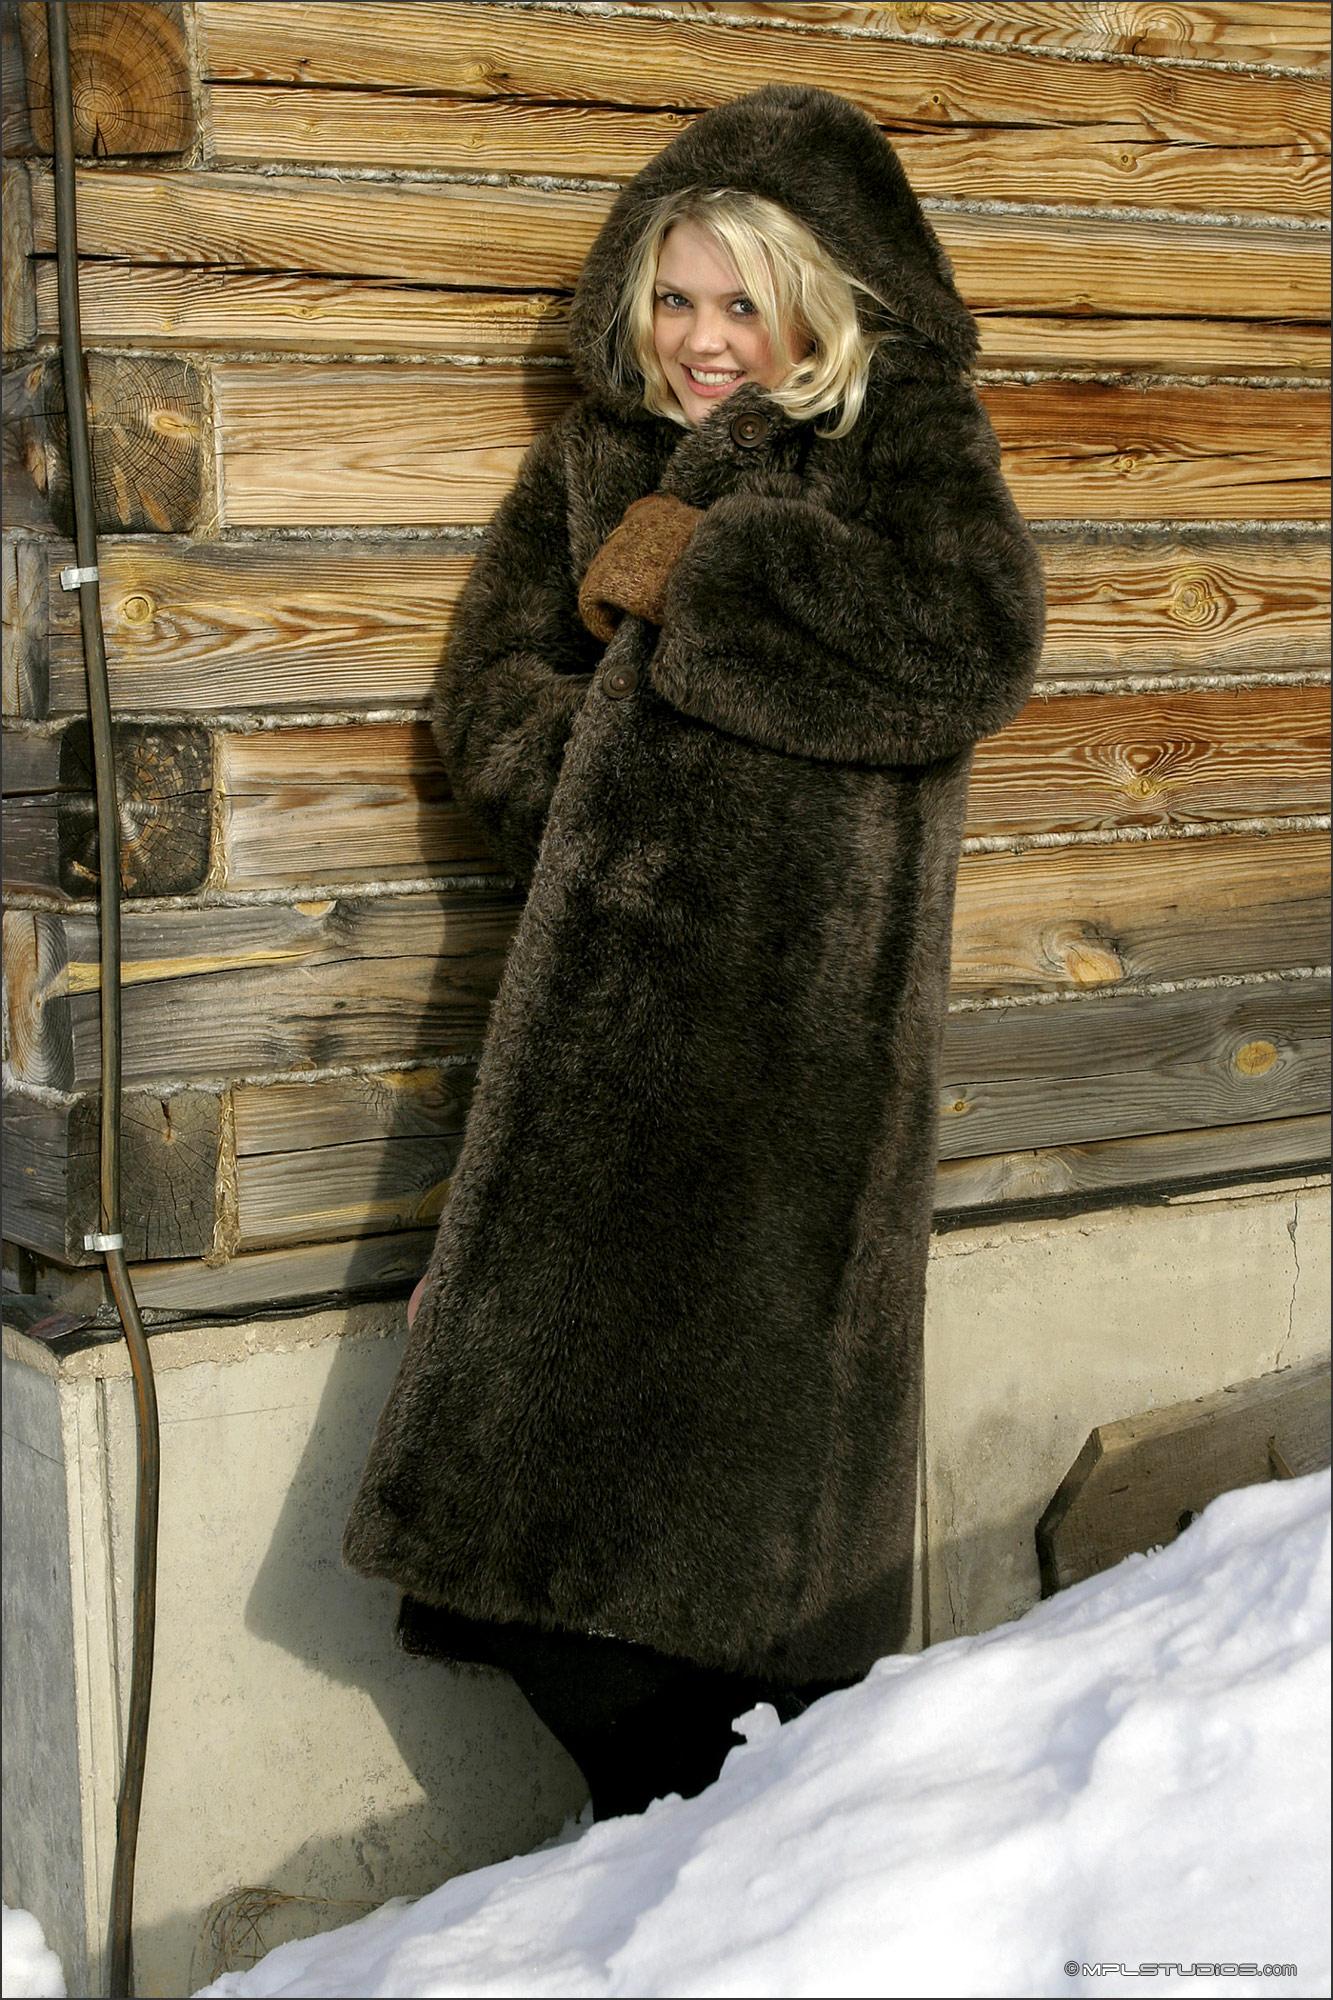 valia-winter-nude-snow-outdoor-blonde-fur-mplstudios-08